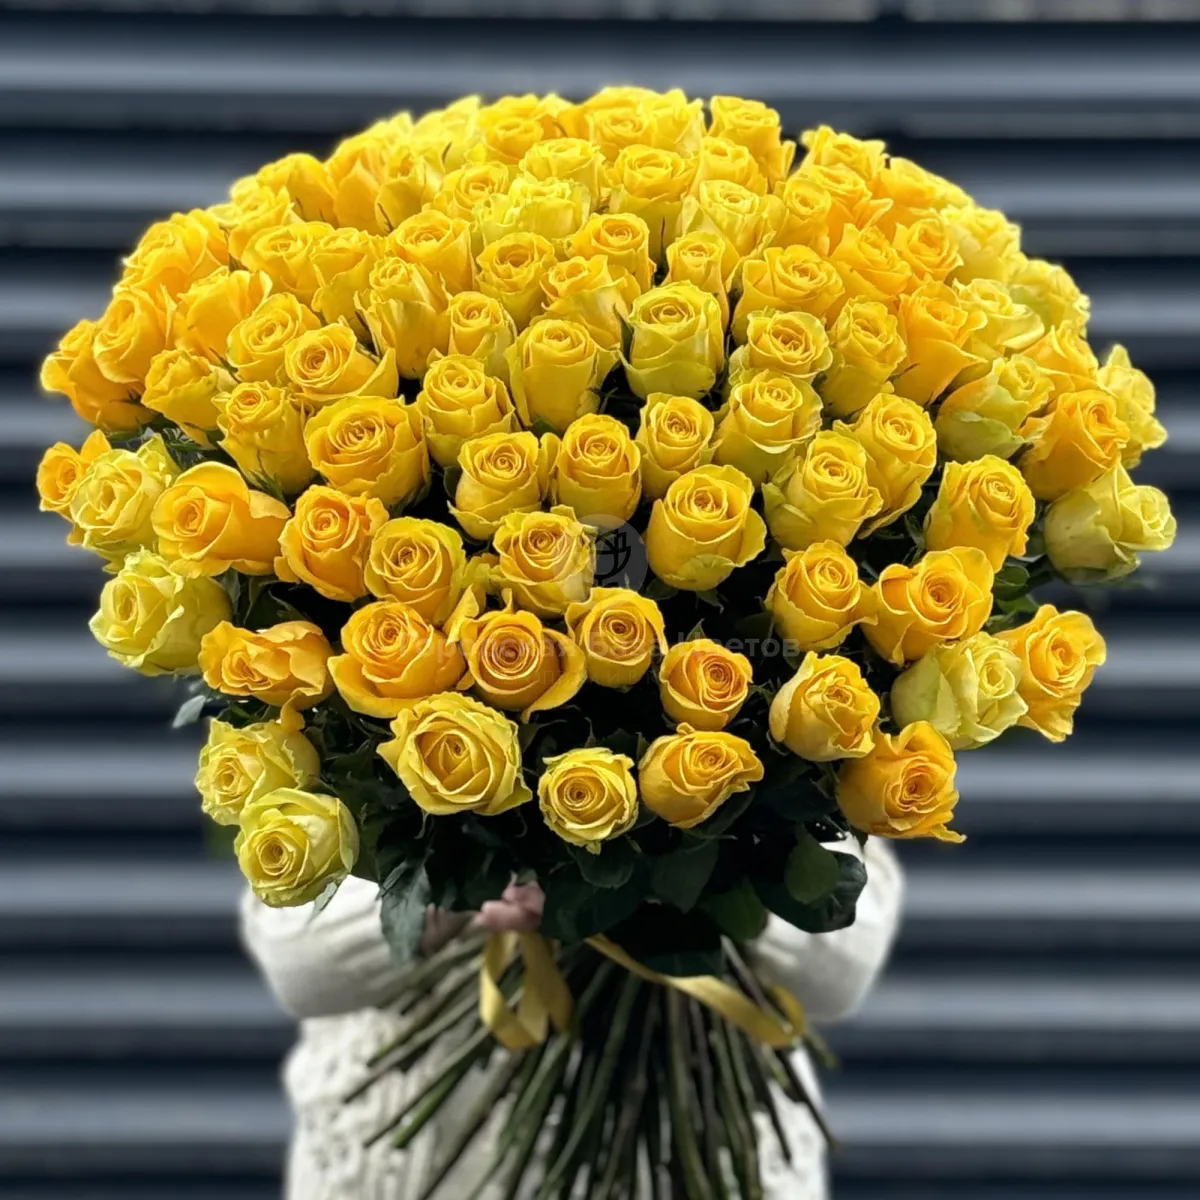 Букет 101 желтая роза эквадор (70см)